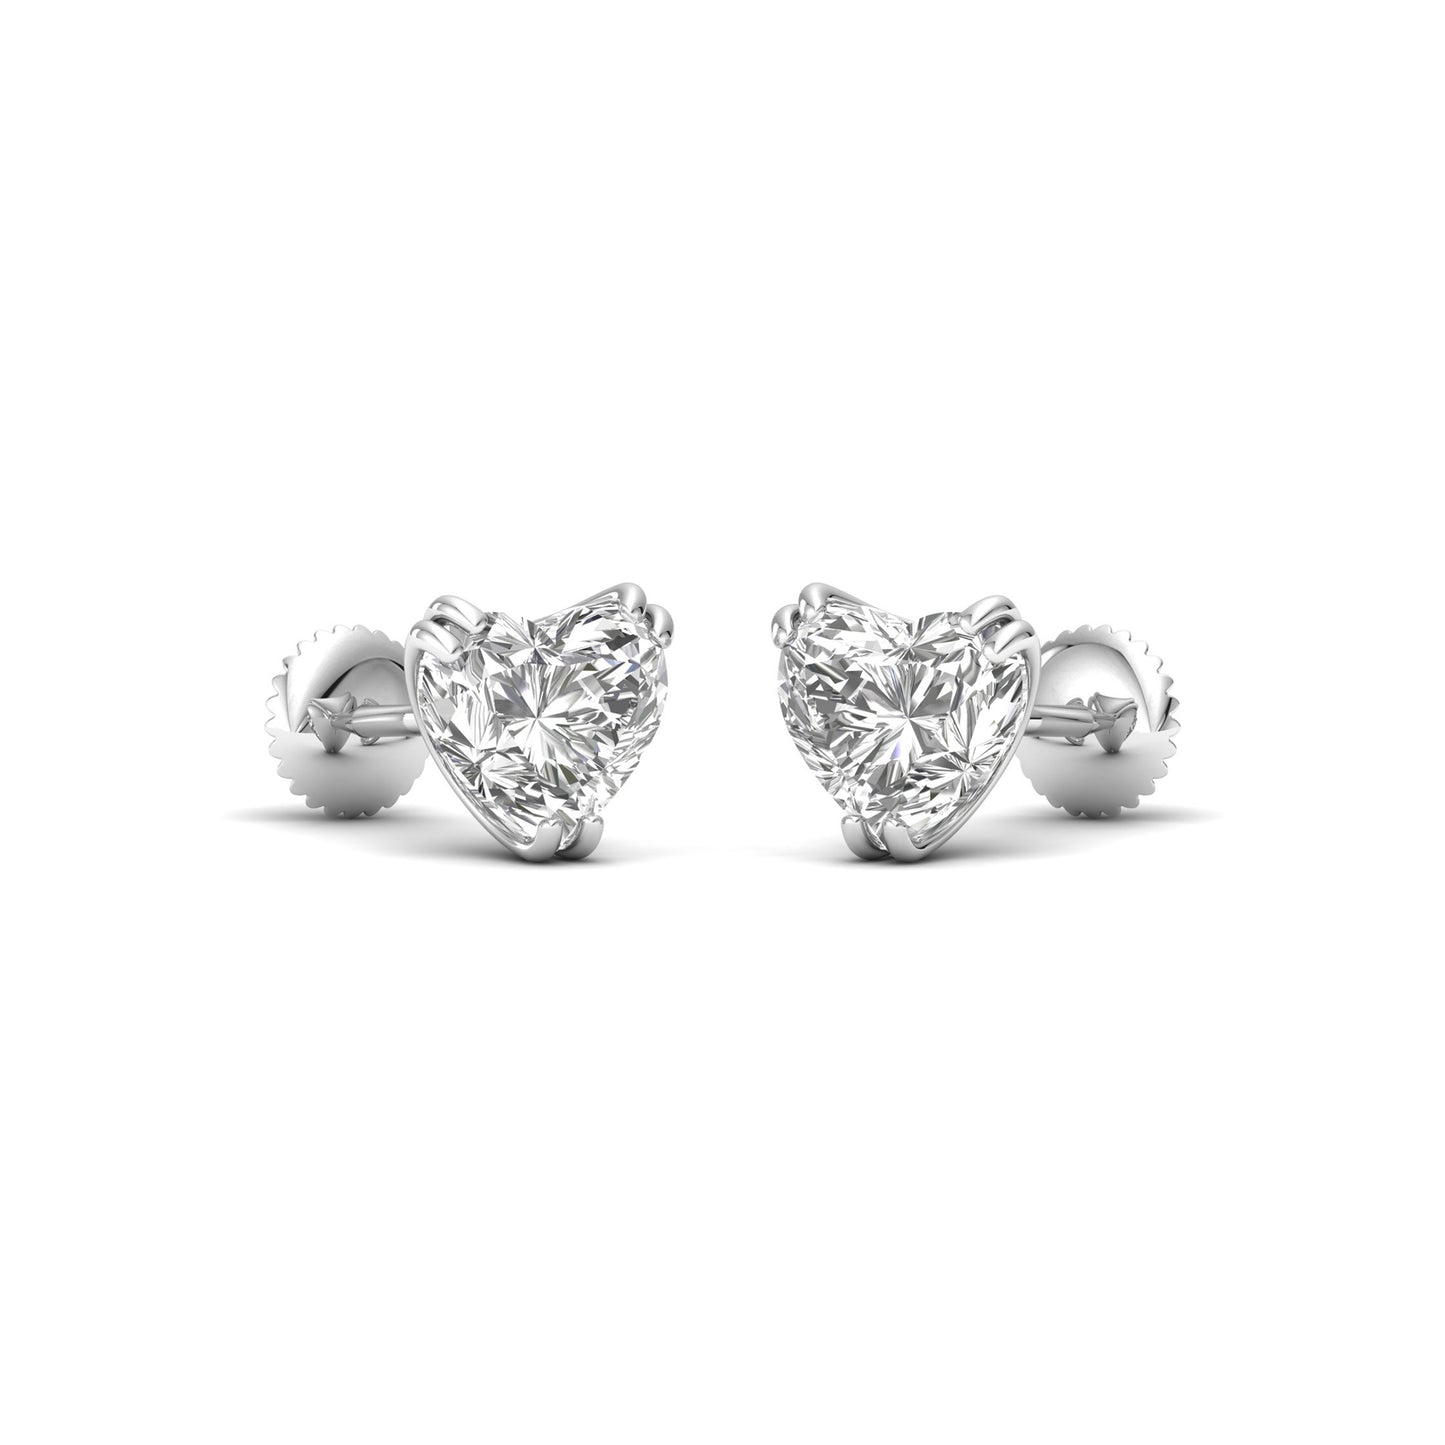 Heartfelt Glamour: Embrace Romance with Our Stunning Diamond Earring in Heart Shape